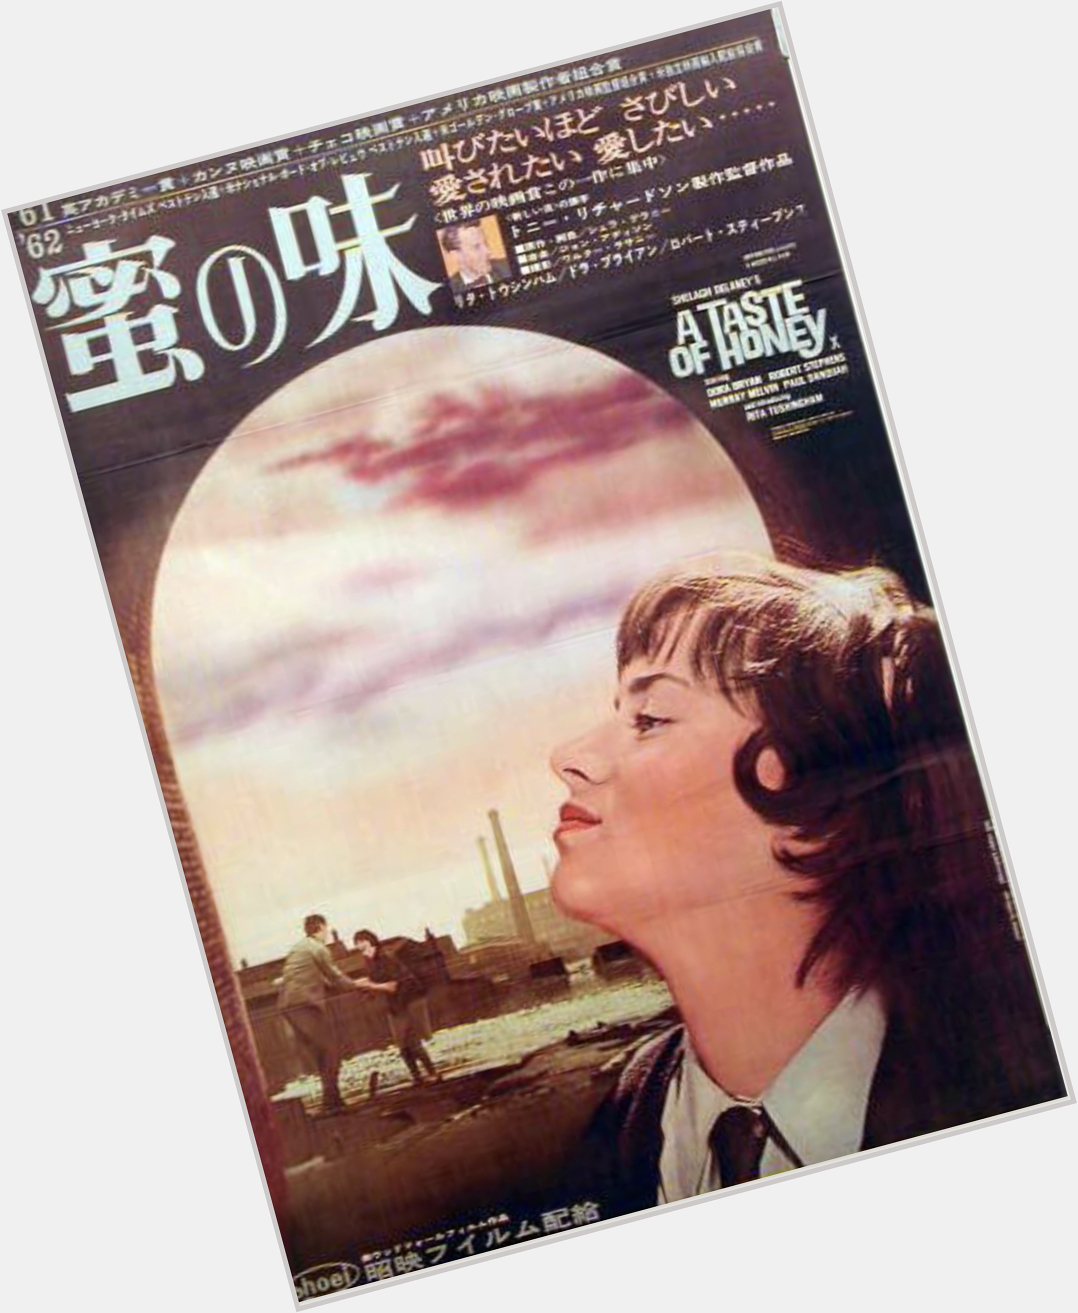 Happy birthday to Rita Tushingham - A TASTE OF HONEY - 1961 - Japanese release poster 